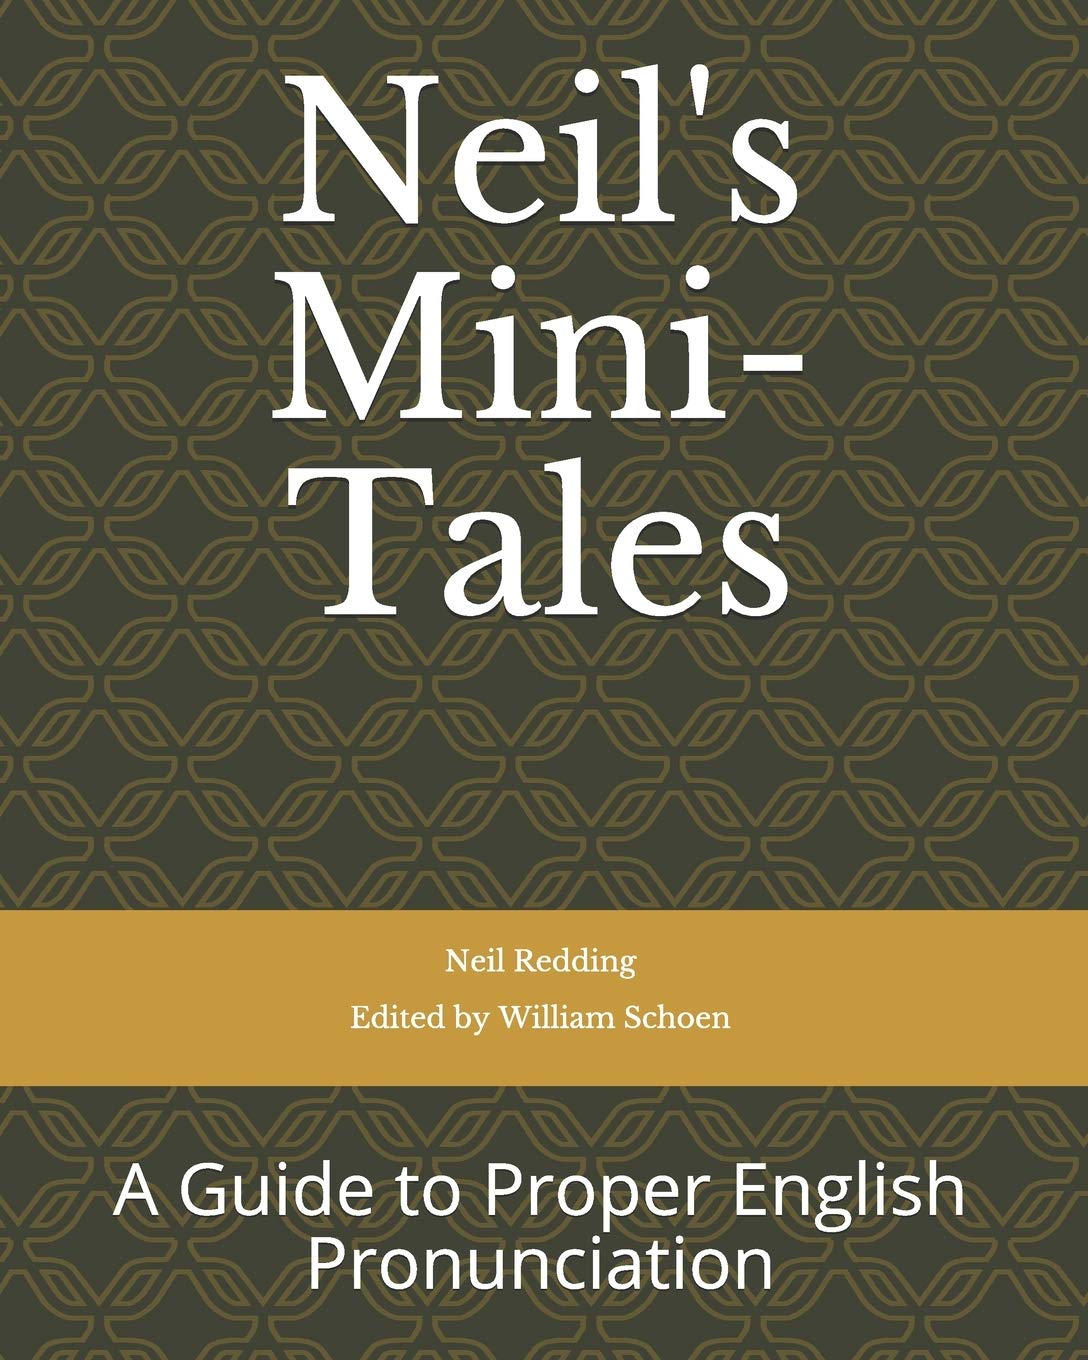 Neil's Mini-Tales: A Guide to Proper English Pronunciation